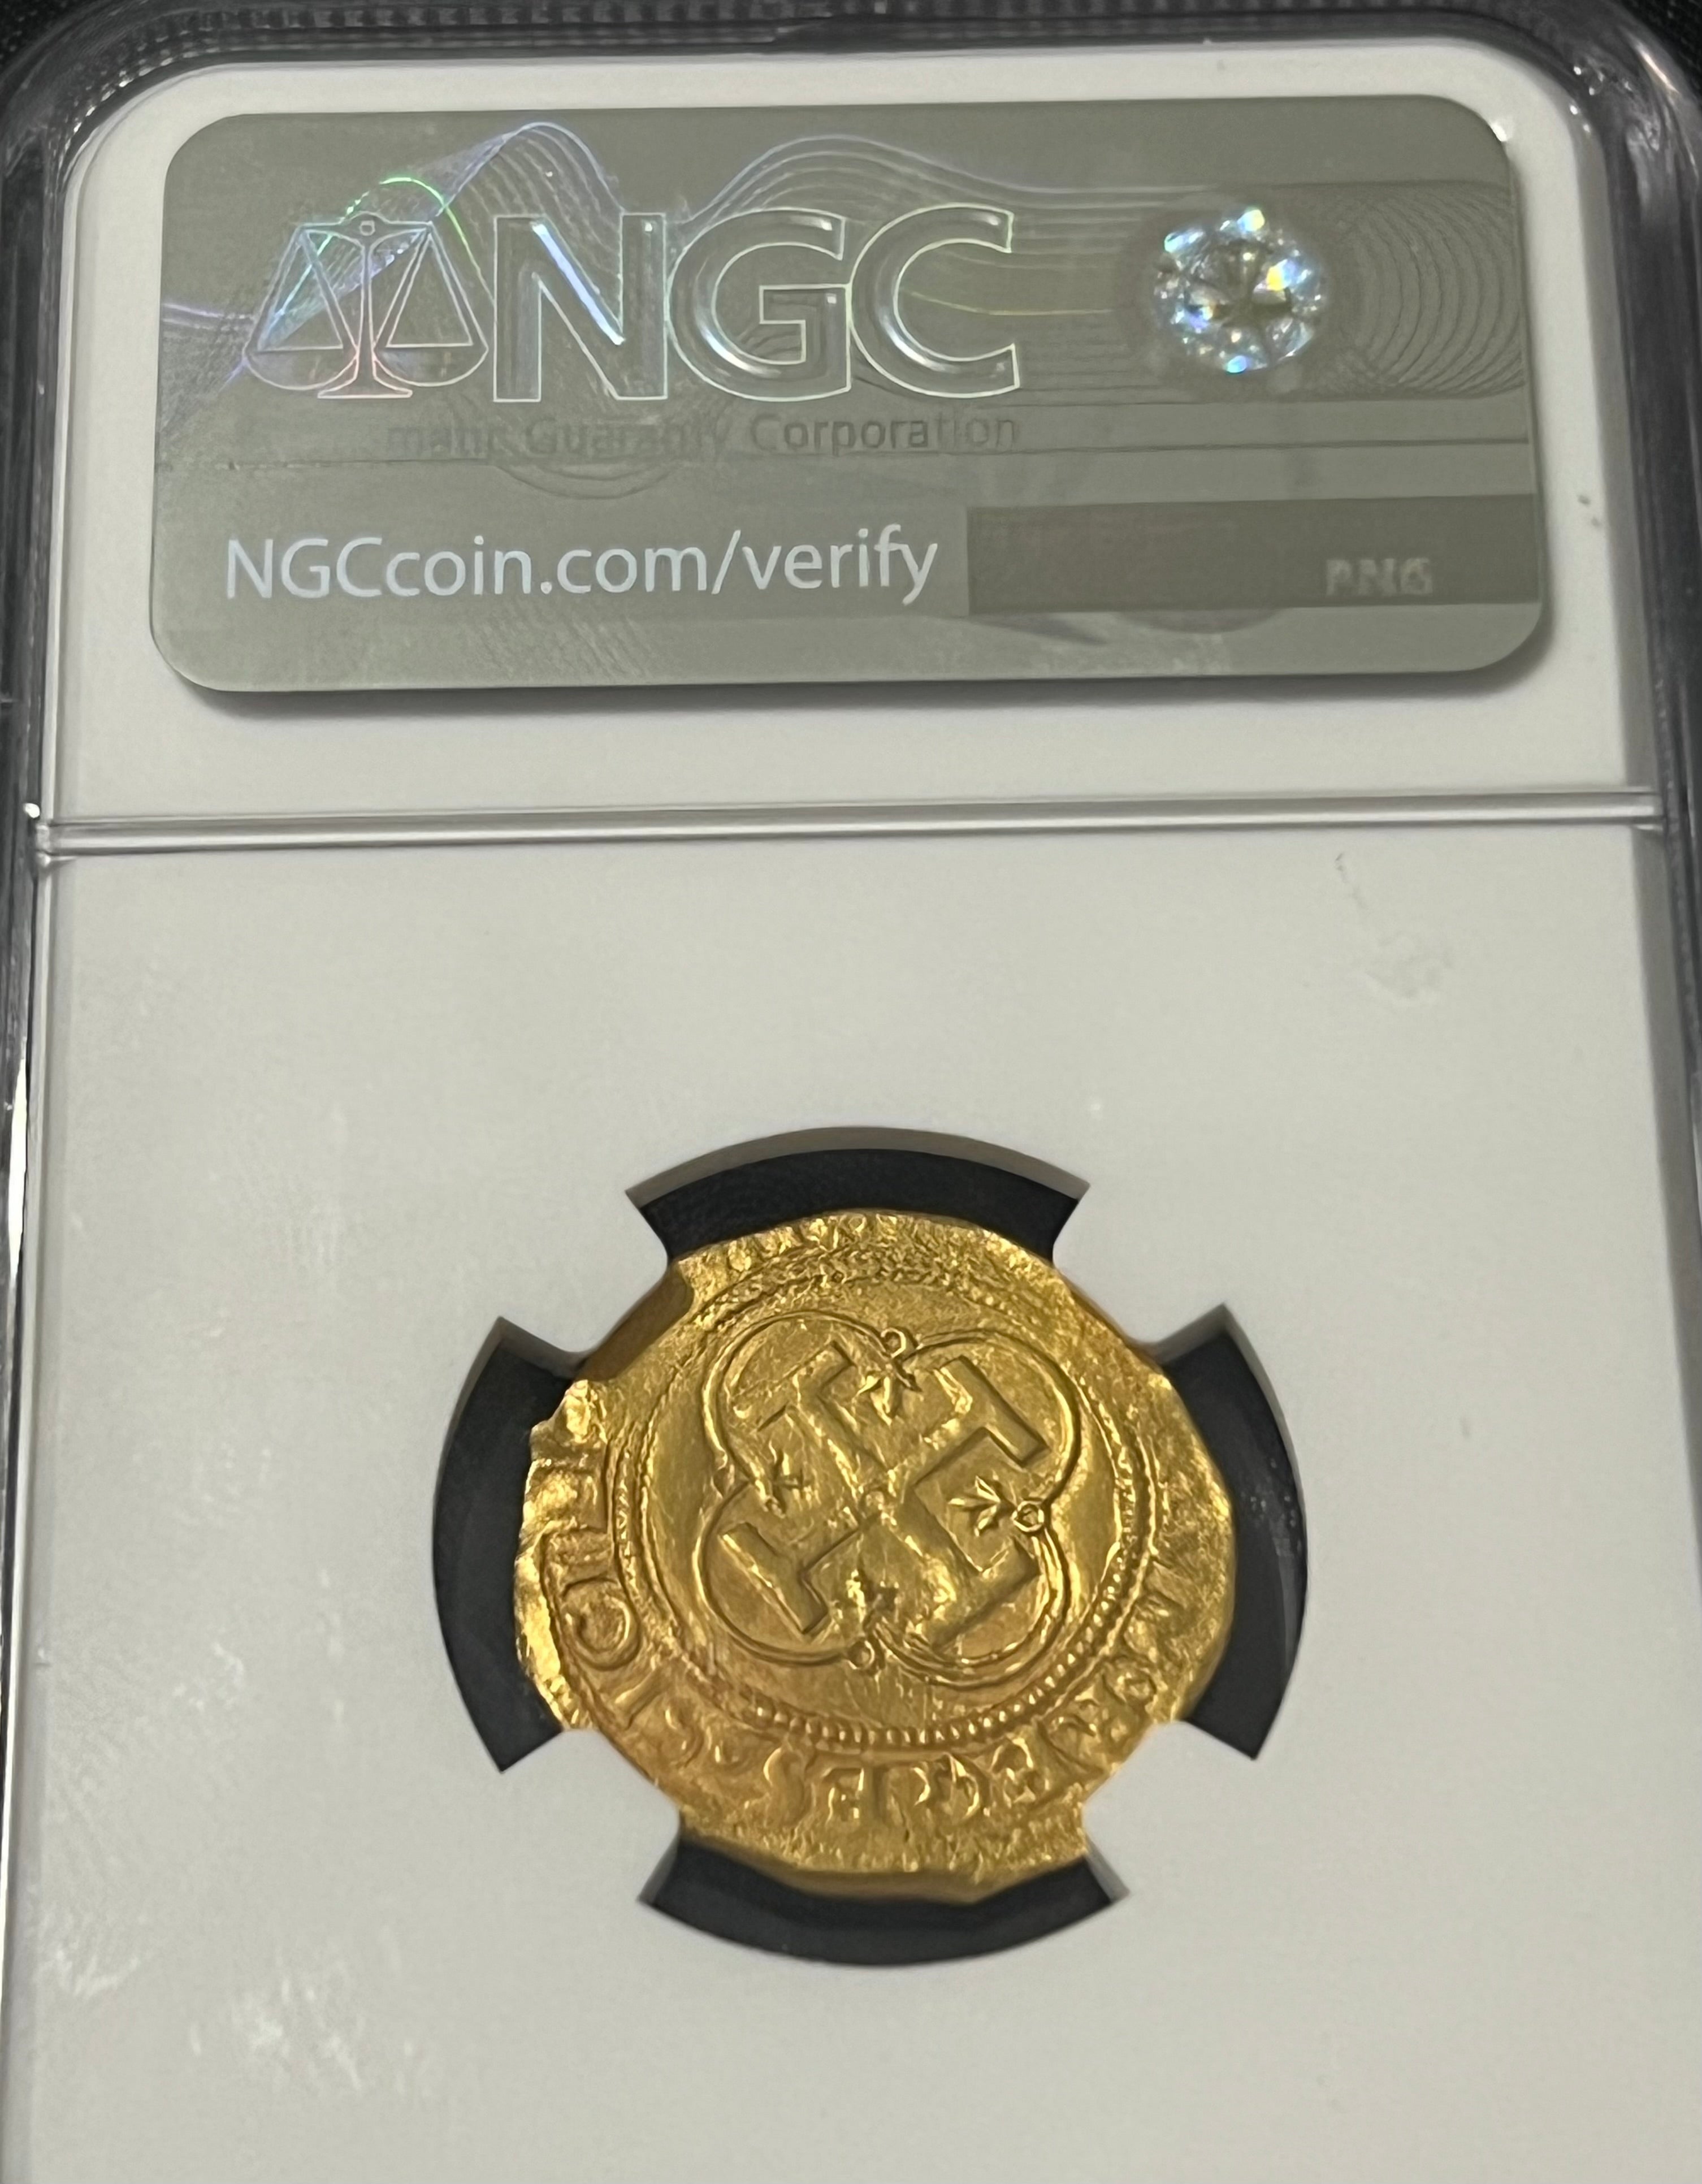 1 Escudo Seville, Spain Gold Coin NGC Grade UNC Details